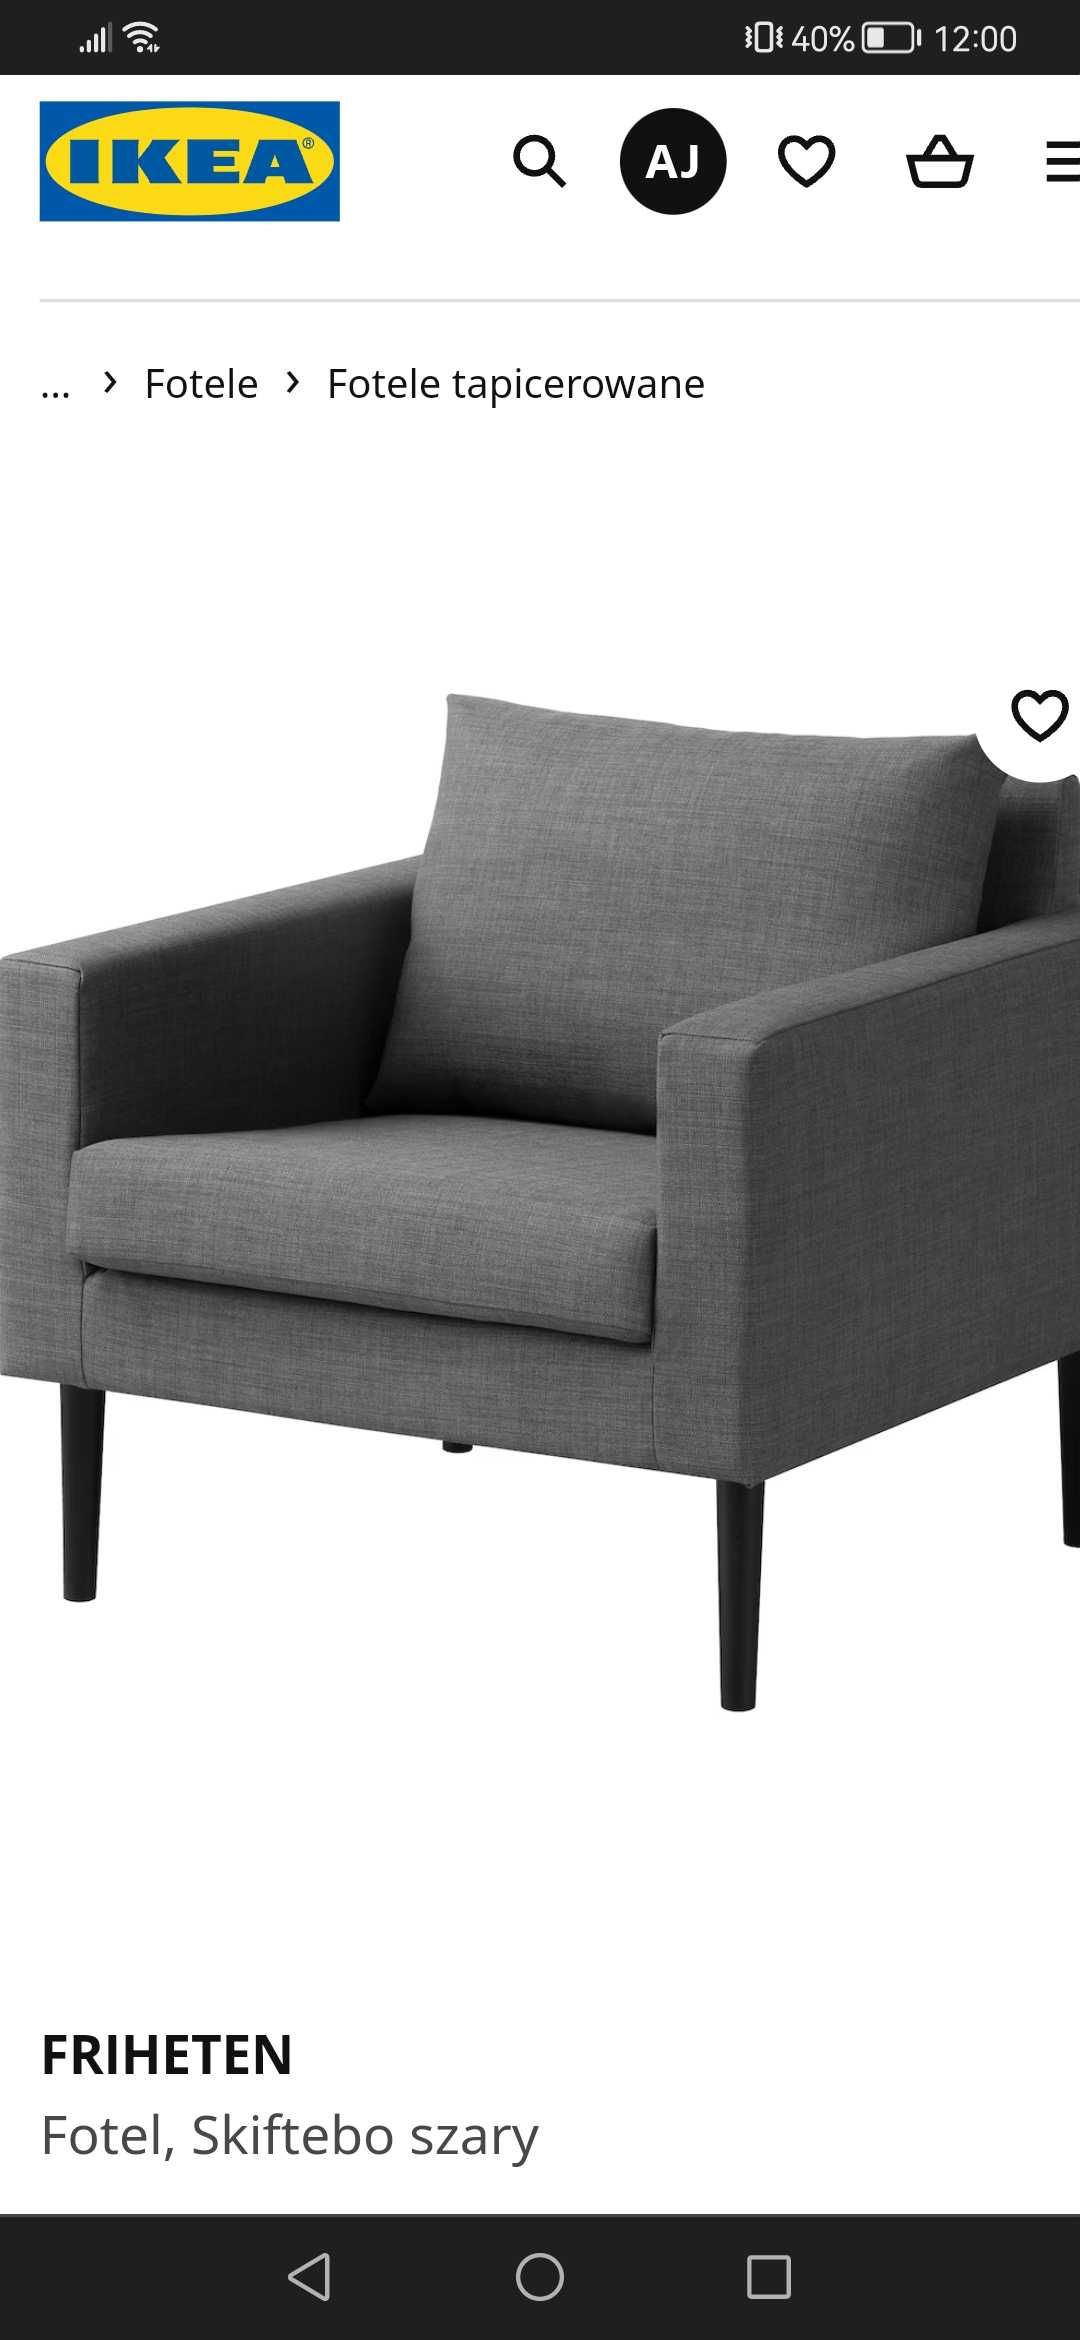 Fotel szary z Ikea